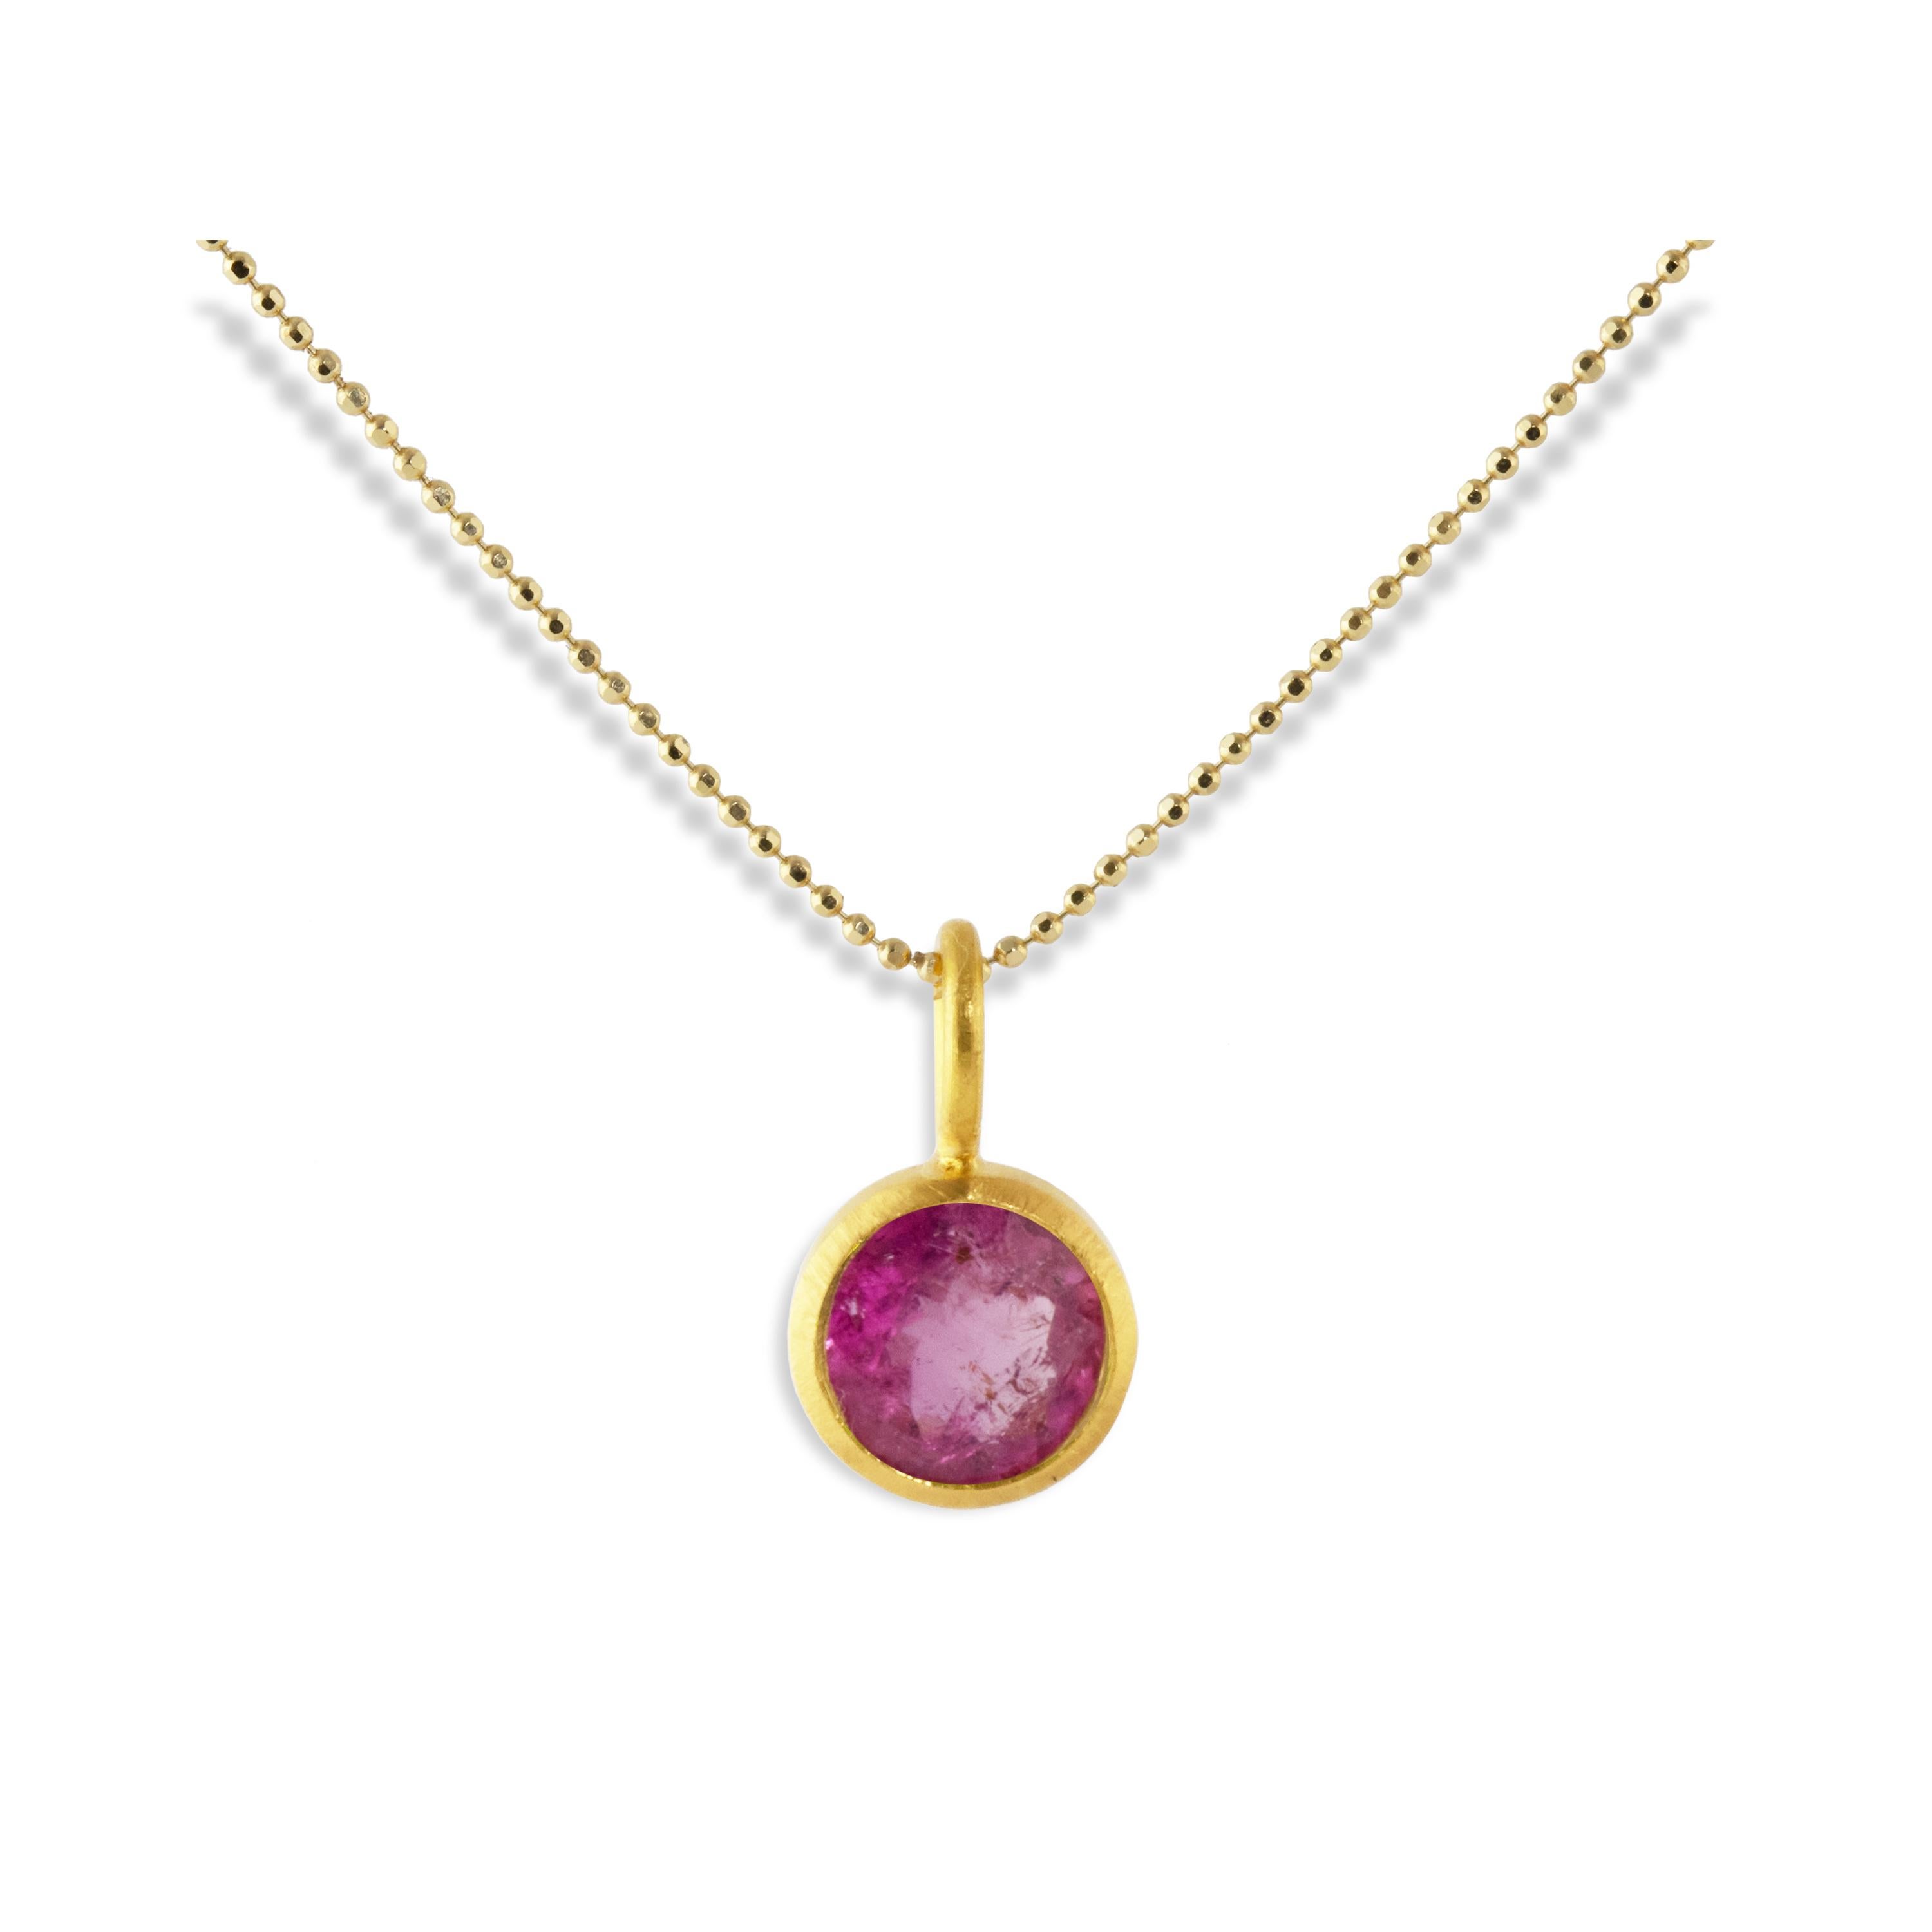 Contemporary Ico & the Bird Fine Jewelry Pink Tourmaline 22k Gold Pendant